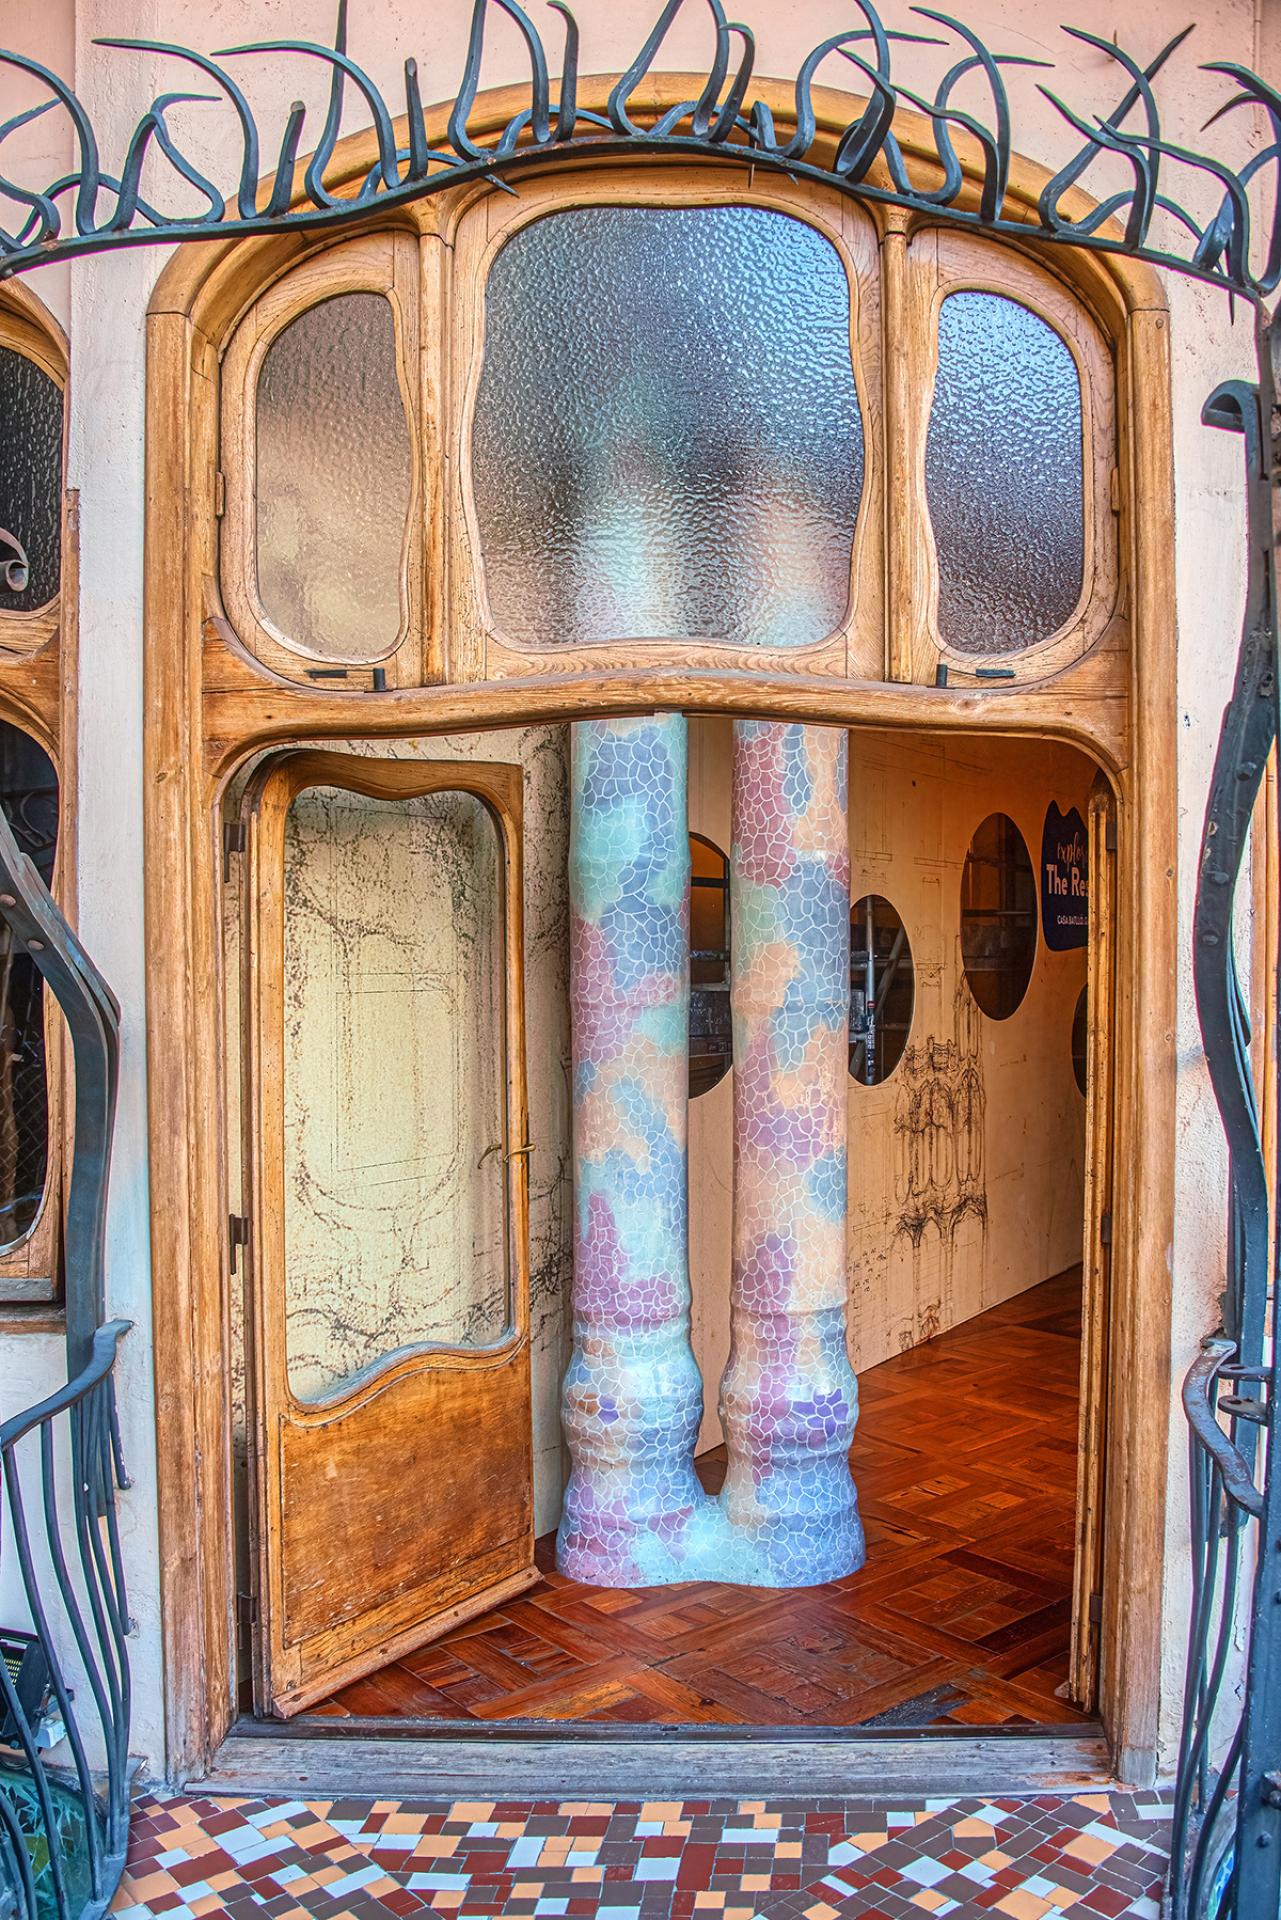 London Photography Awards Winner - Casa Batlló Columns in the Doorway